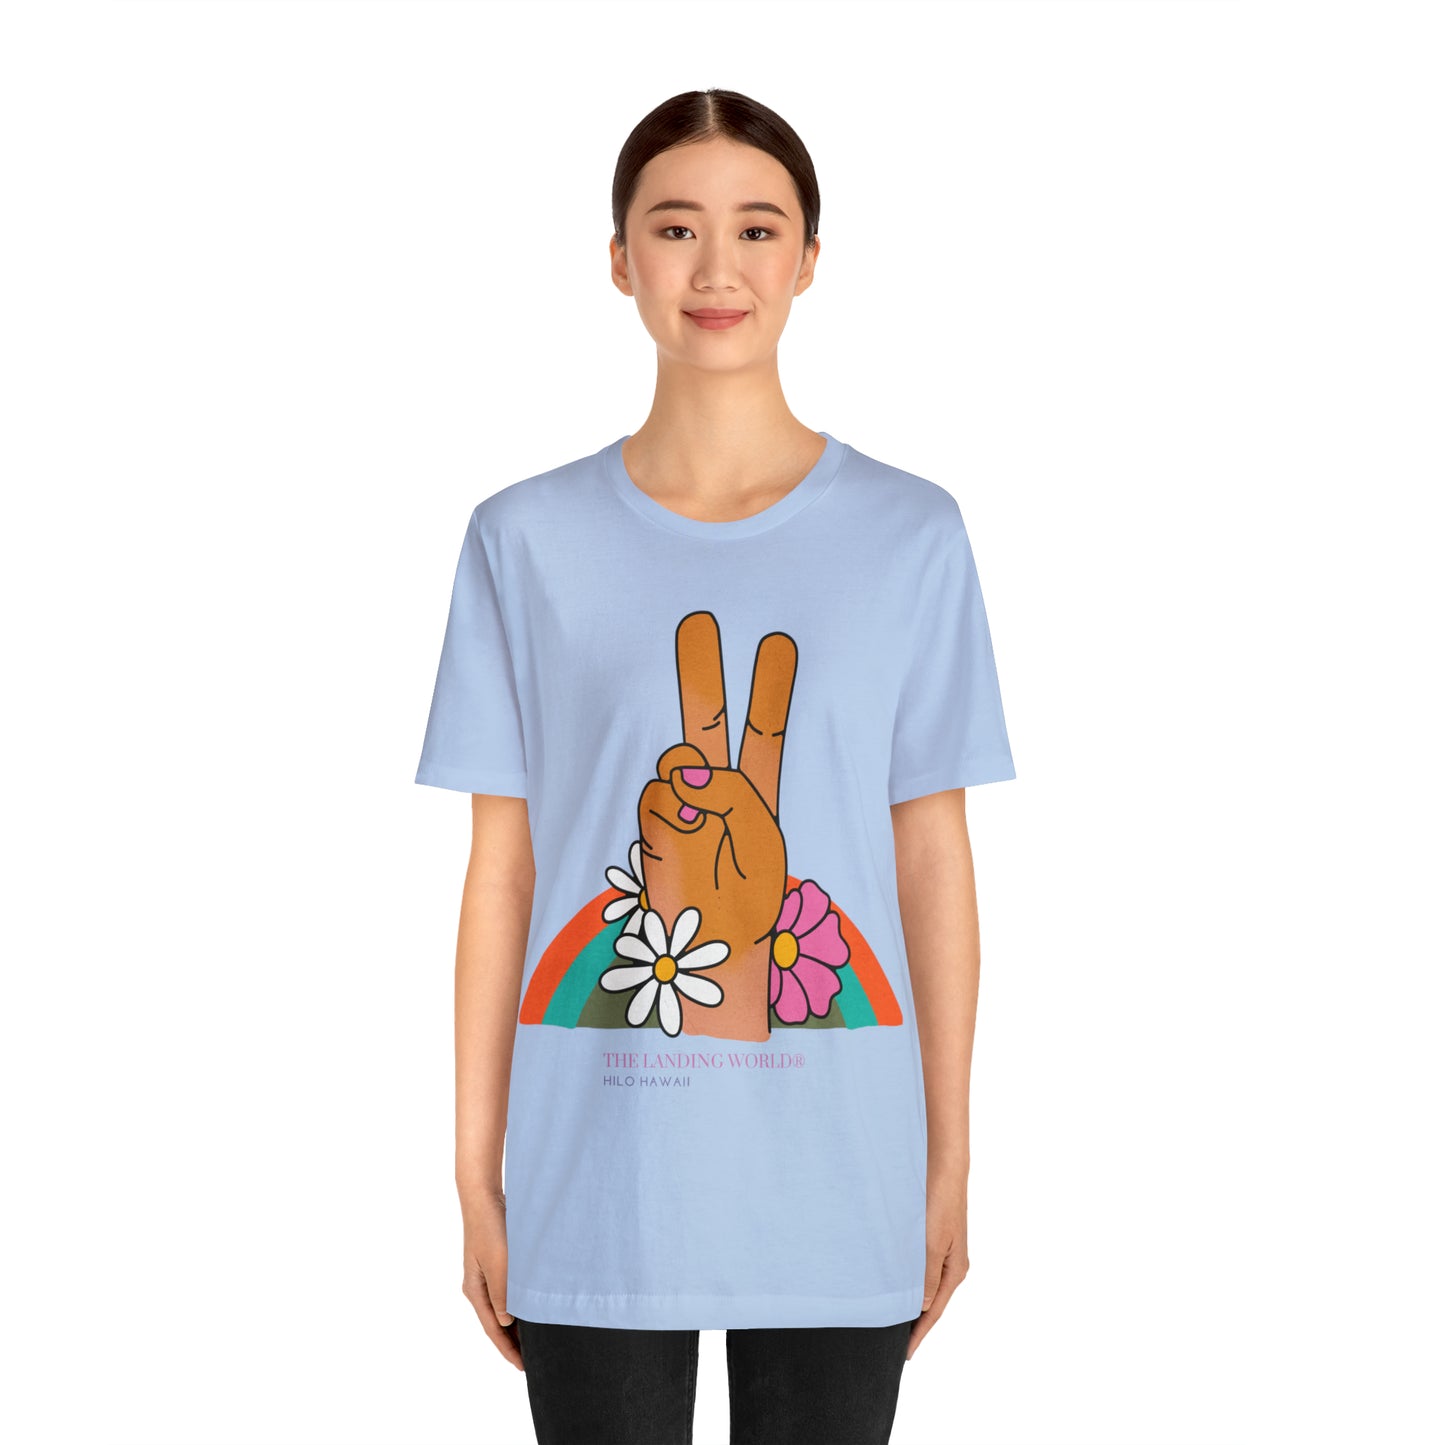 Unisex Adult Peace Shirt